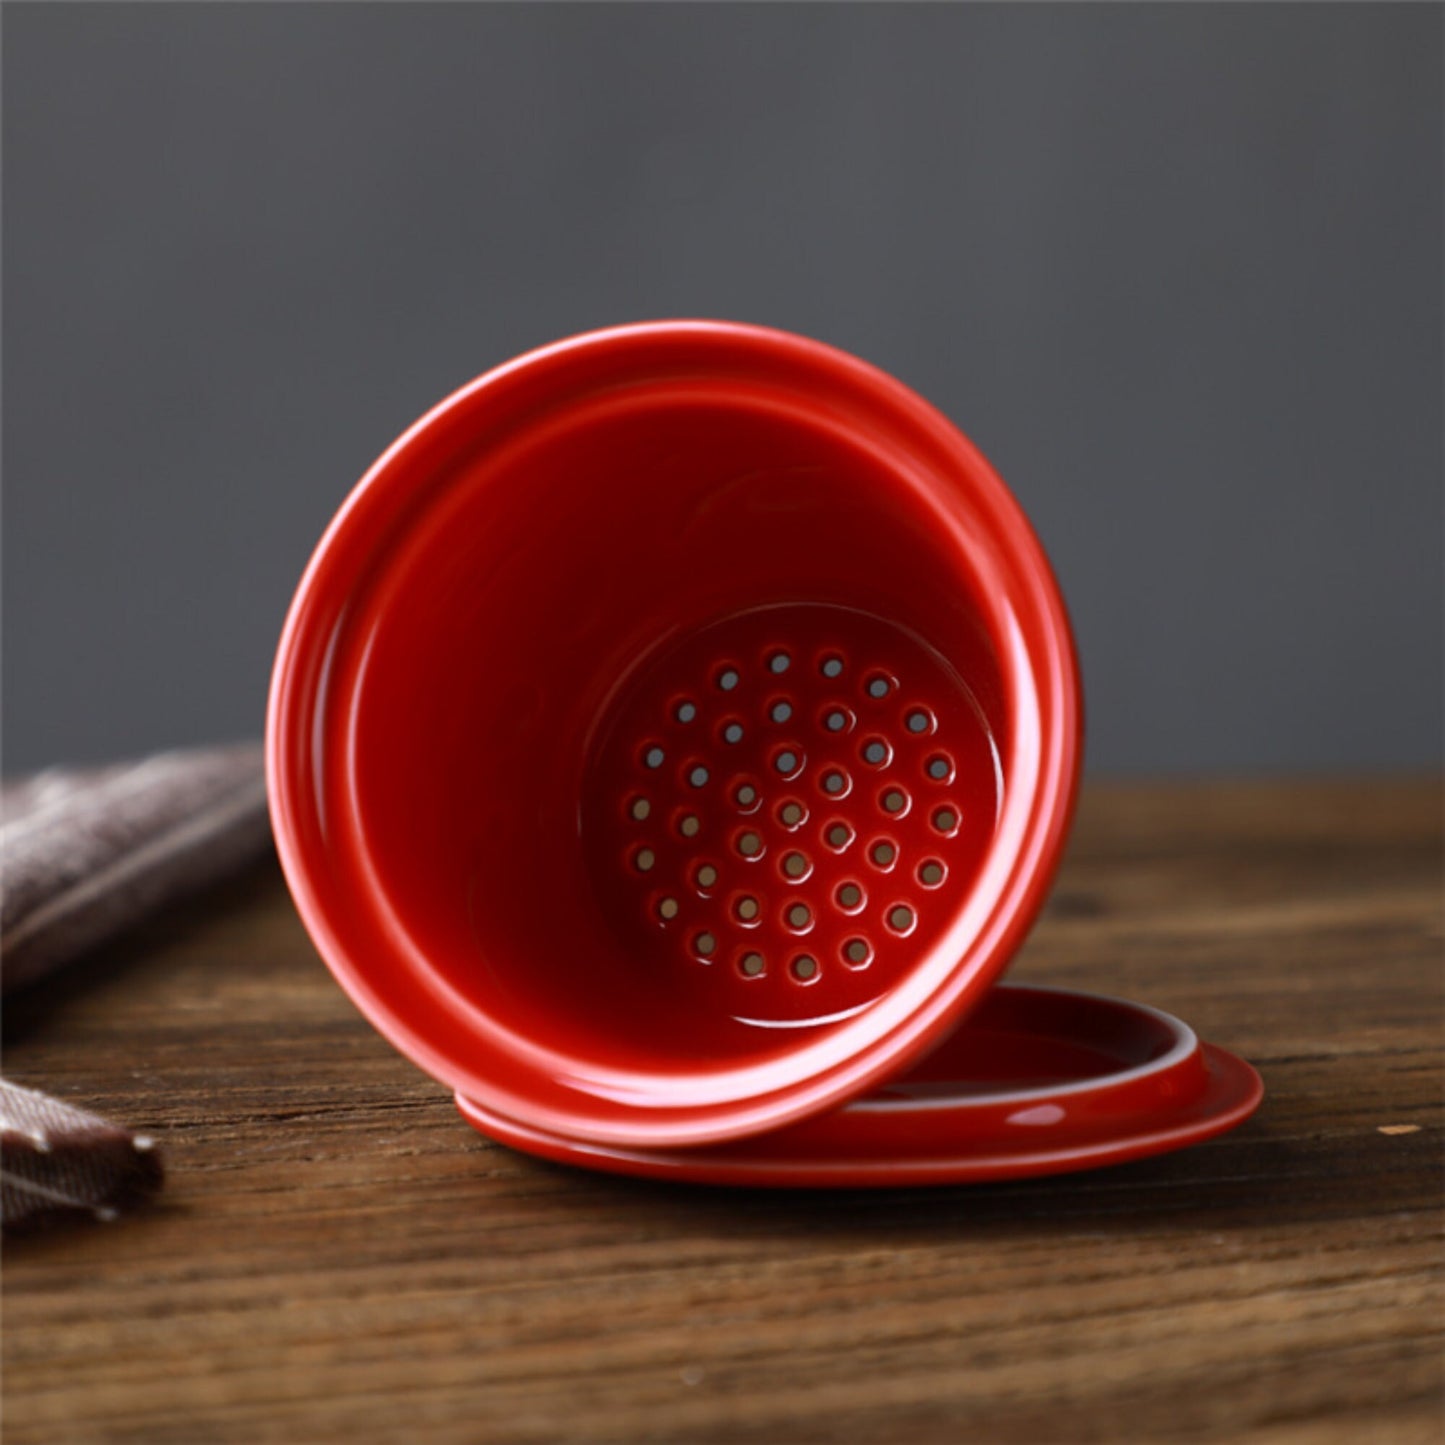 Japanese Mug 2x1 Ceramic With Lid and Strainer | Modern Ceramic Mug, Minimal Coffee Mug, Small Ceramic Pottery Mug, Ceramic Mug With Lid